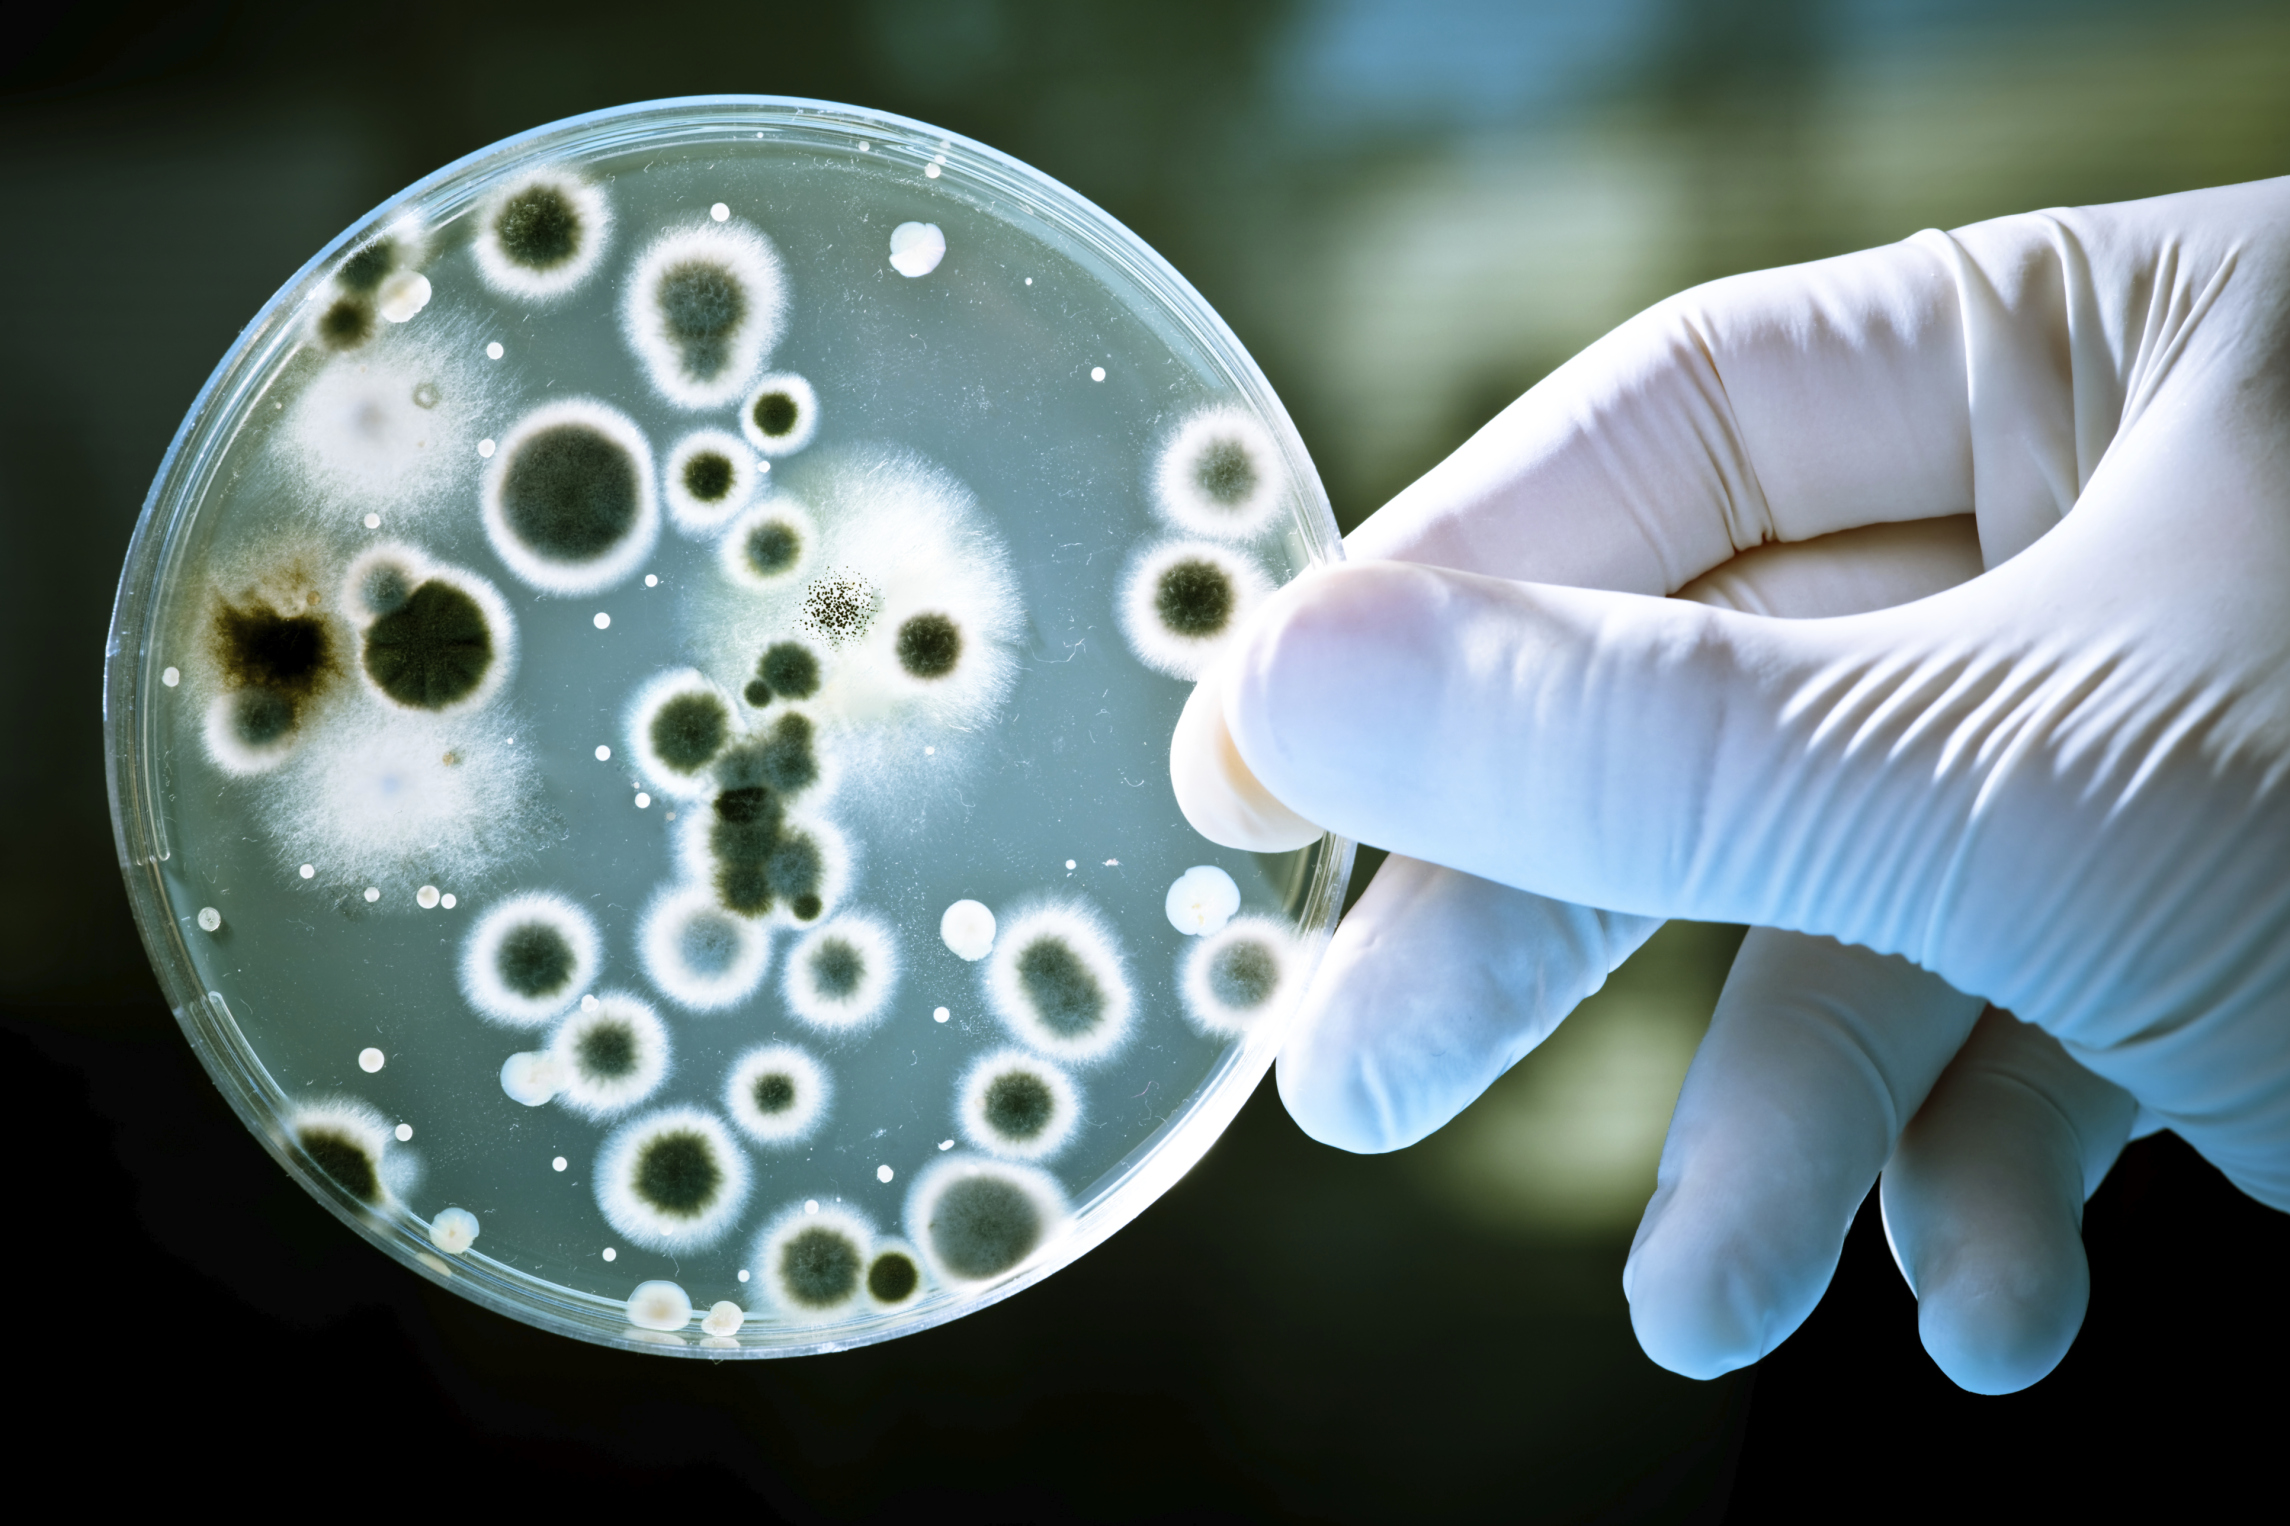 Dishwasher detergent kills bacteria